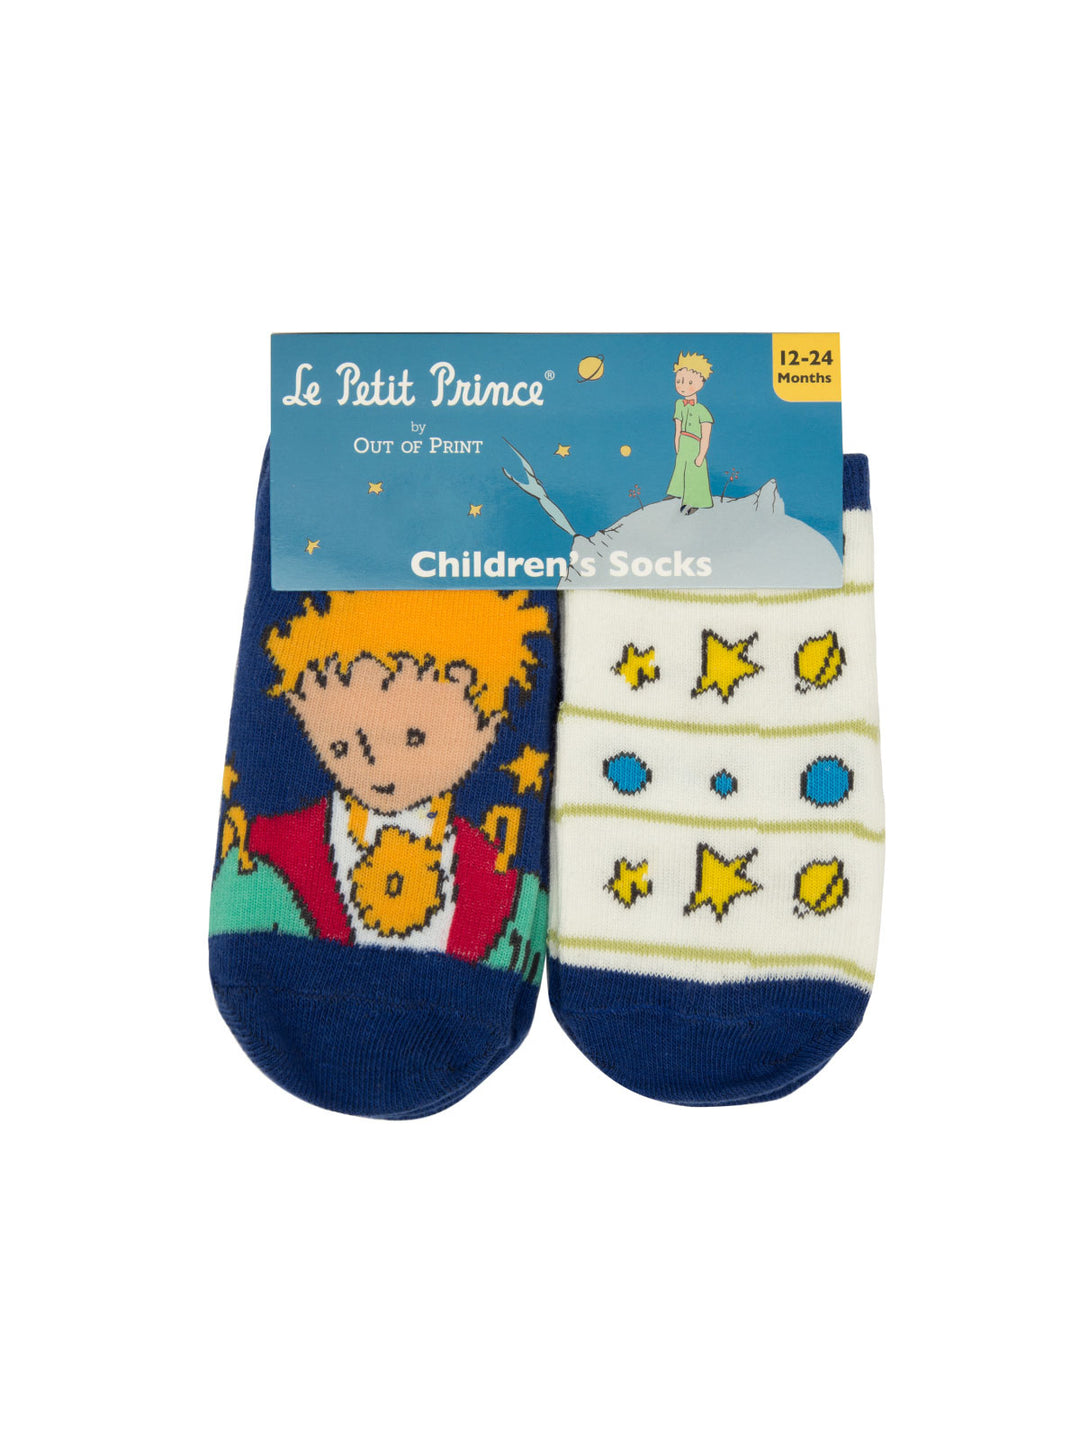 Little Prince Socks | 4 Pack - Main Image Number 1 of 1